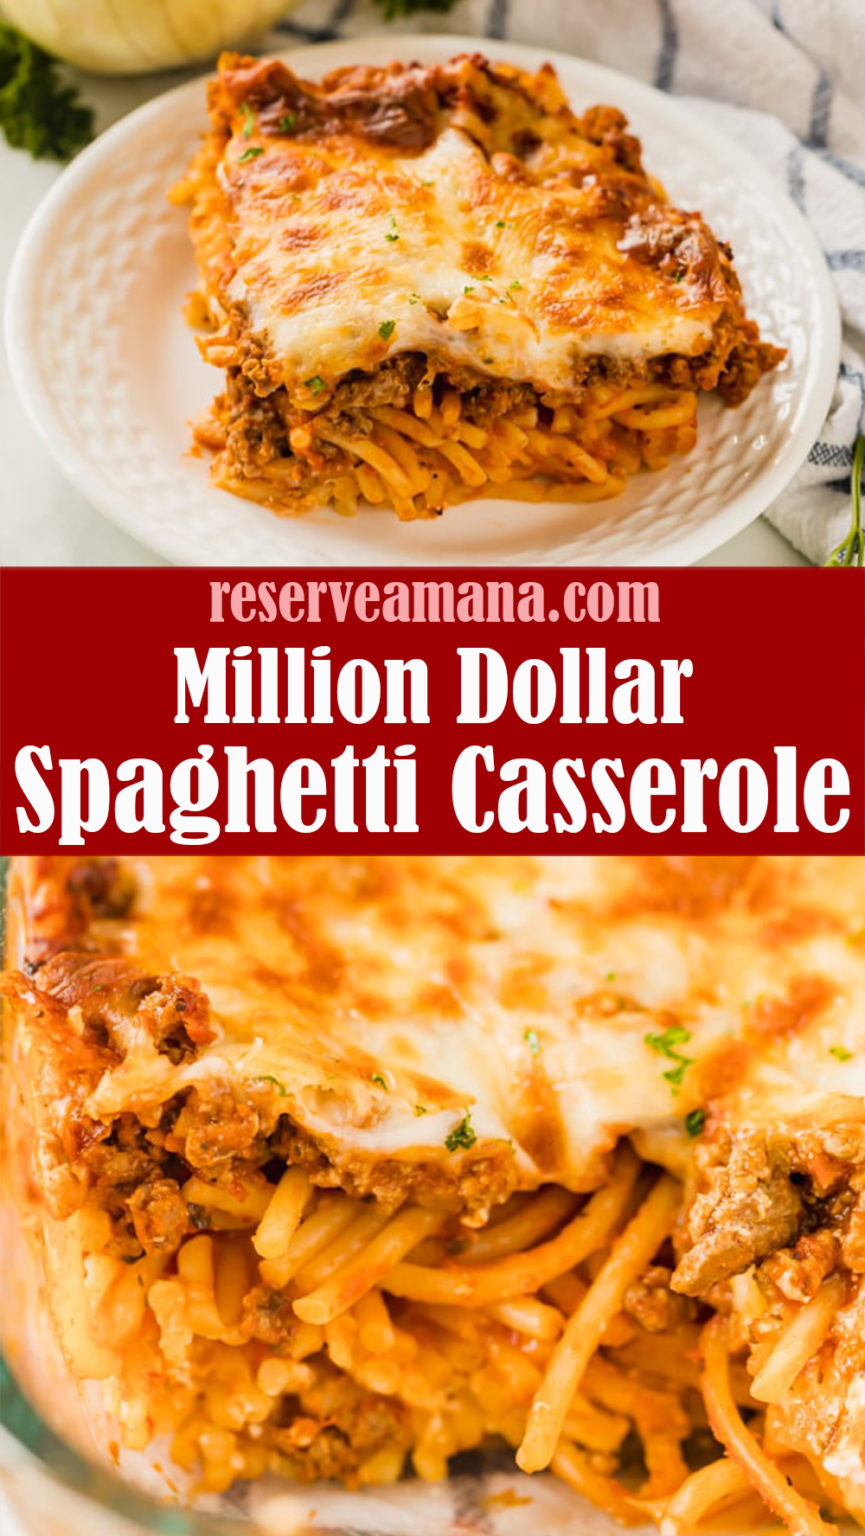 Million Dollar Spaghetti Casserole – Reserveamana